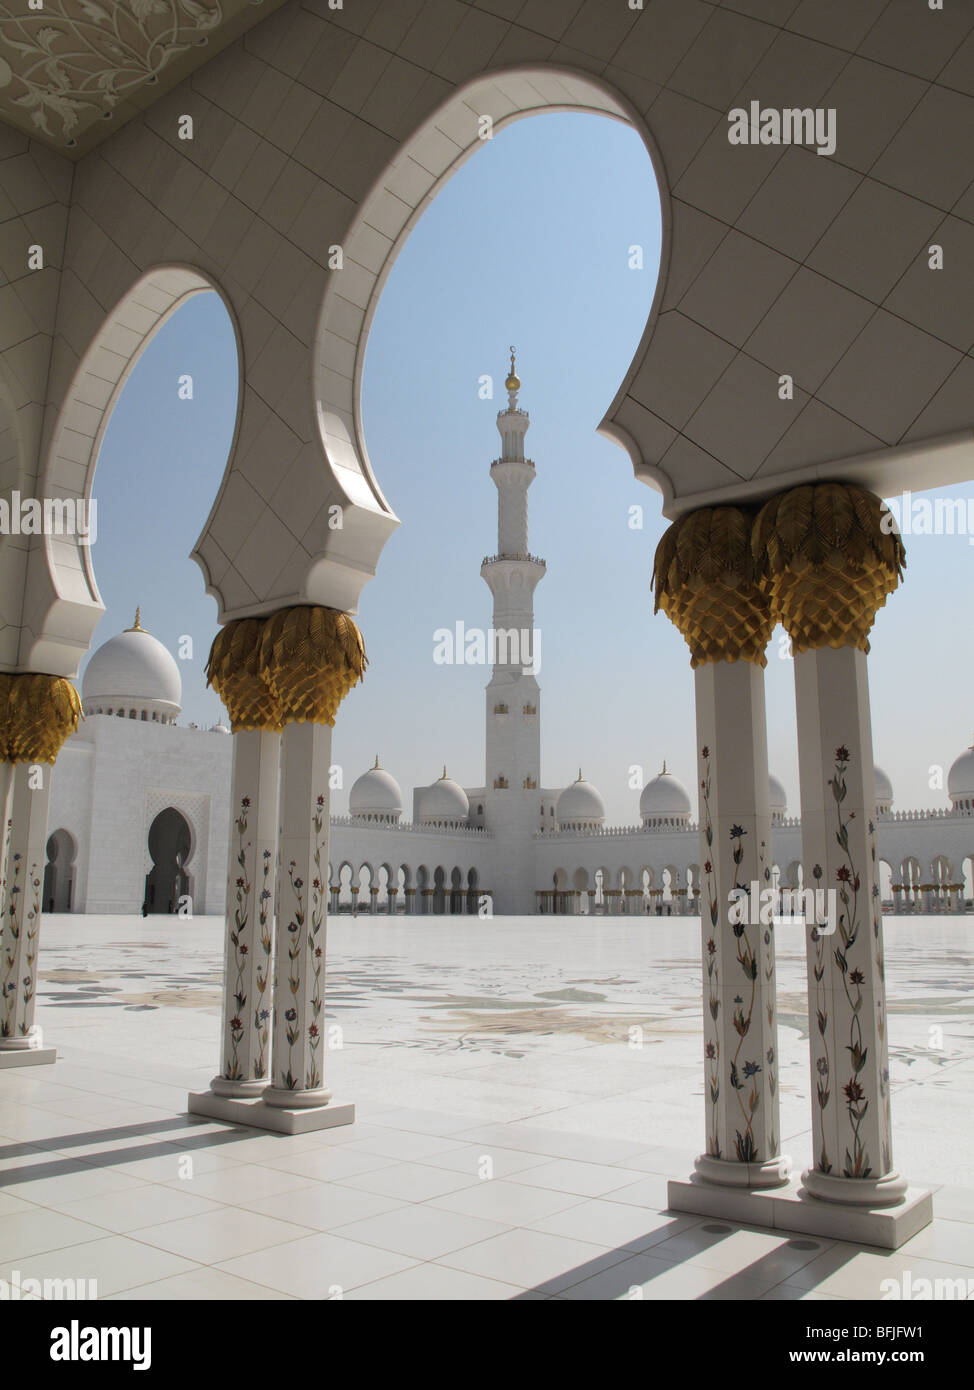 Pasarela Minarett, columnas y arcos de Sheikh Zayed Bin Sultan Al Nahyan, la Mezquita Abu Dhabi Foto de stock